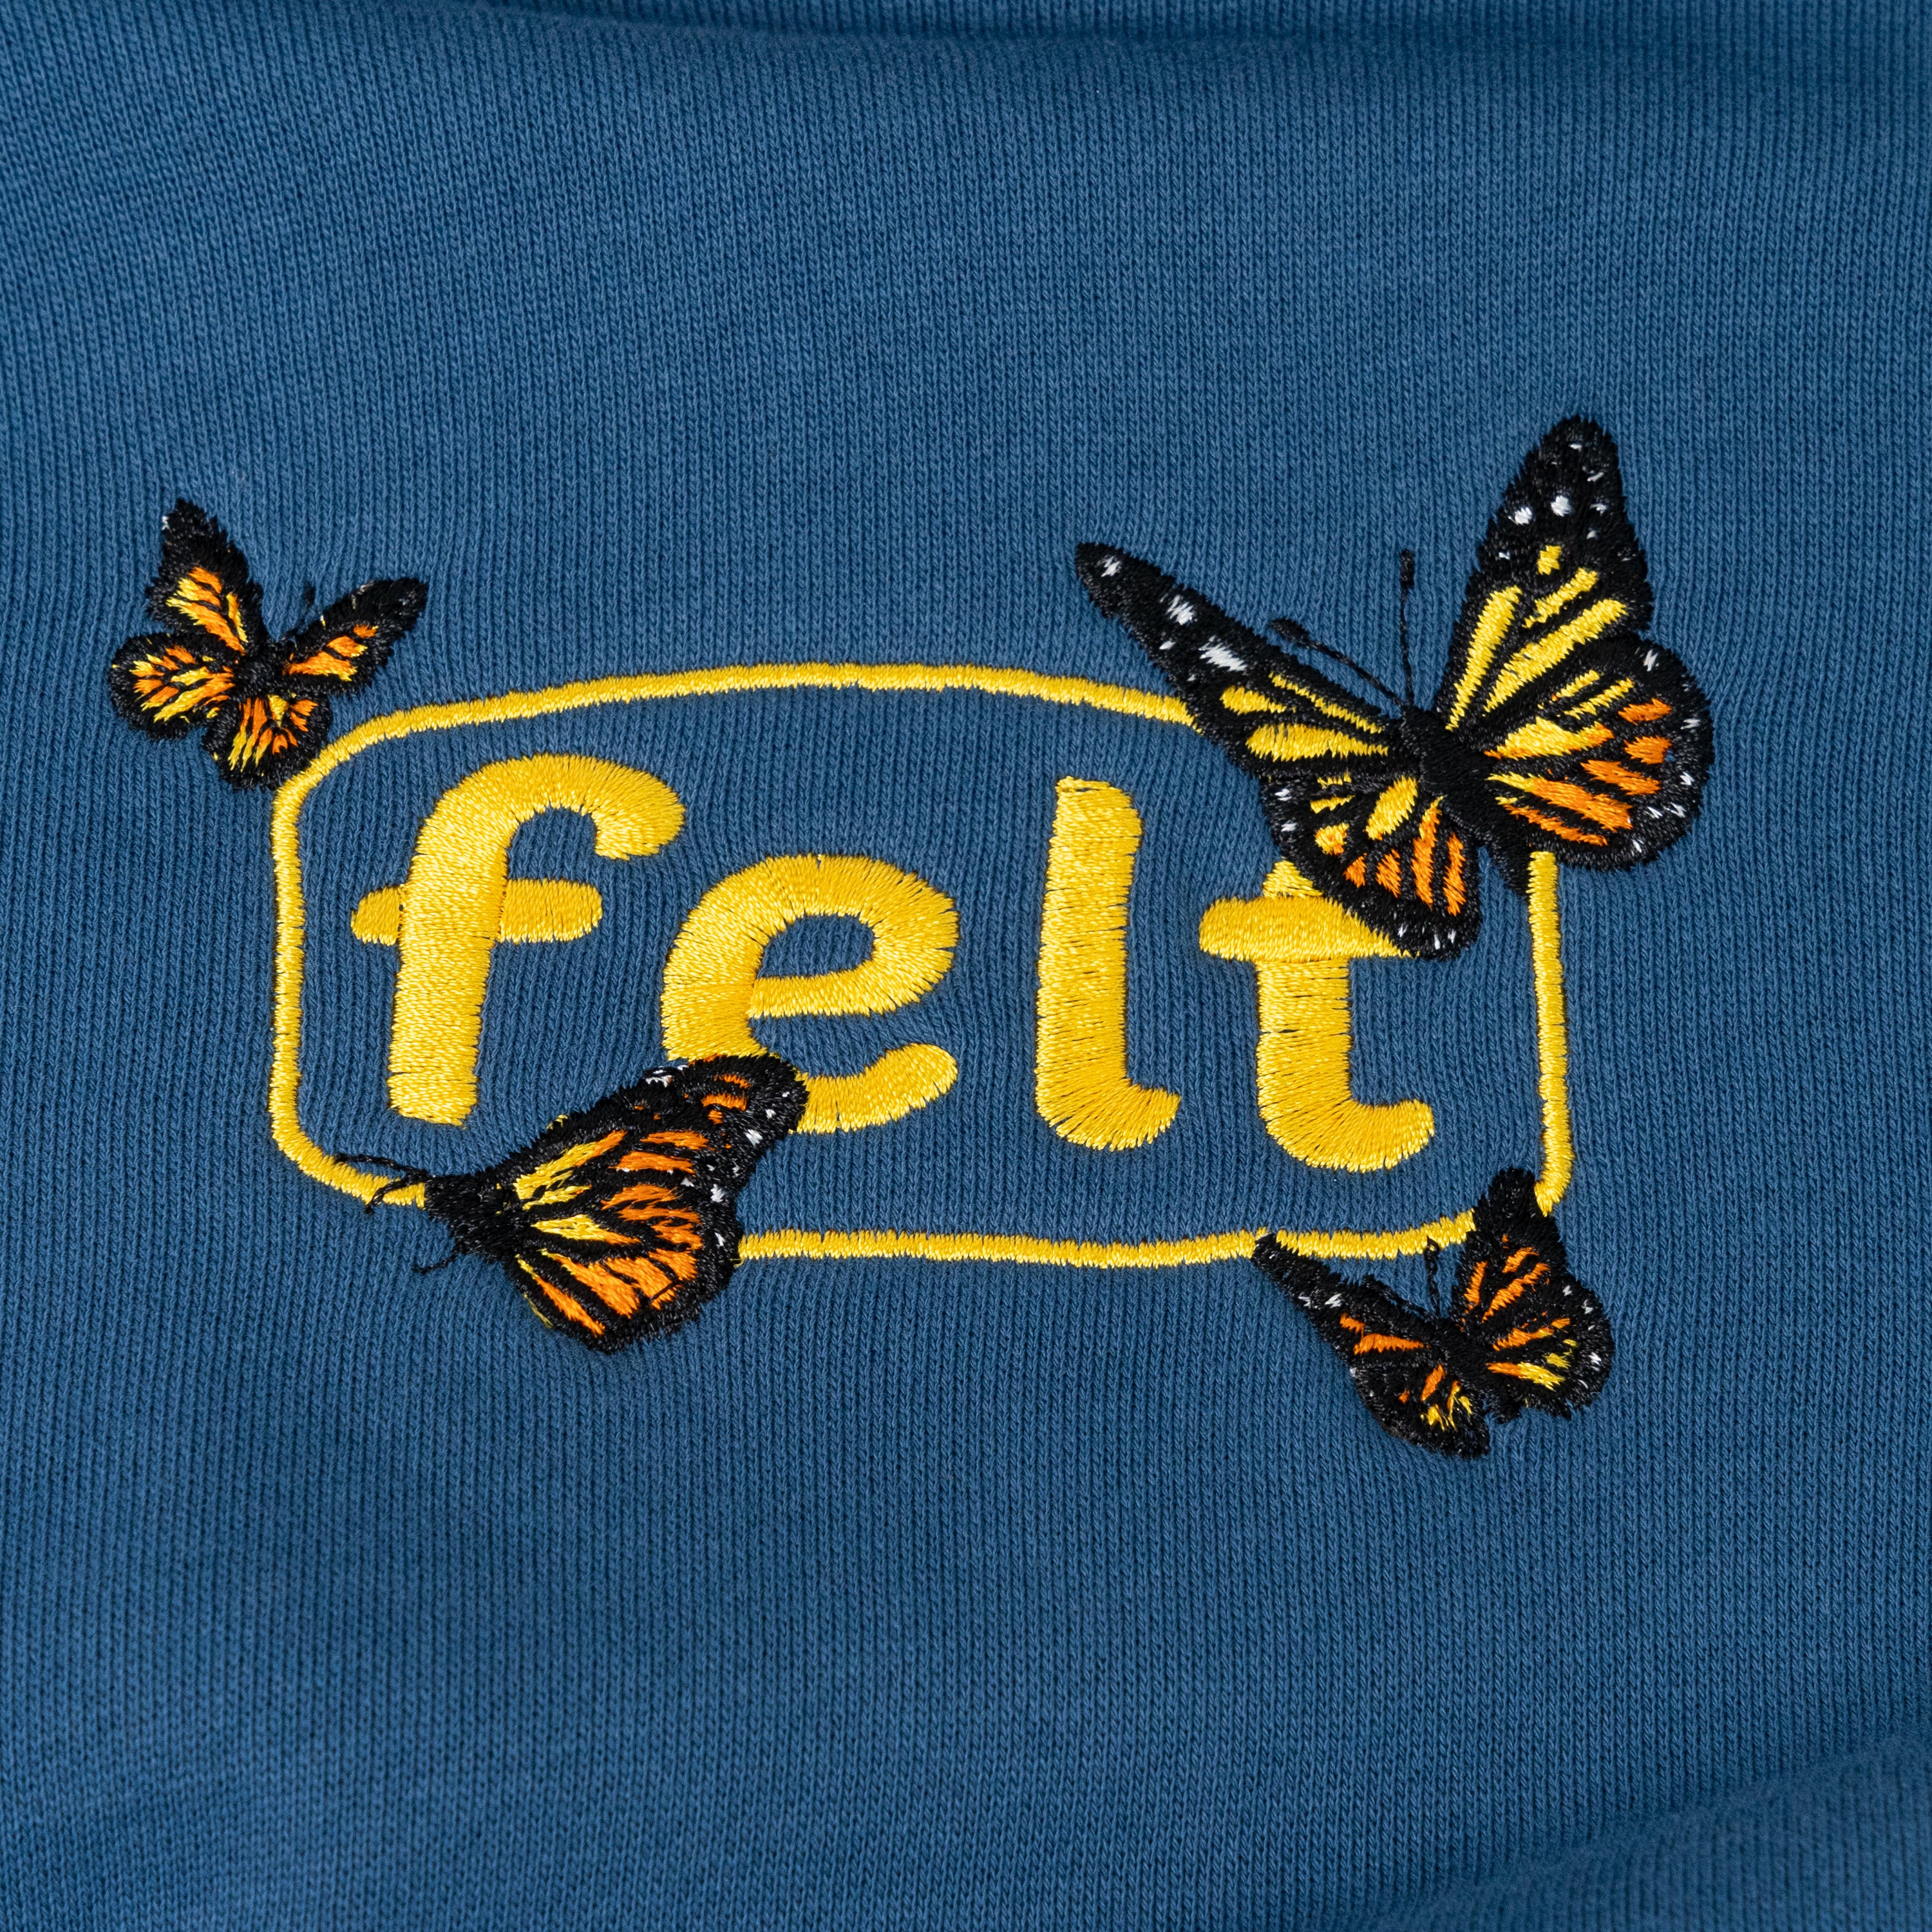 felt - Felt - Butterfly Hoodie - Blue